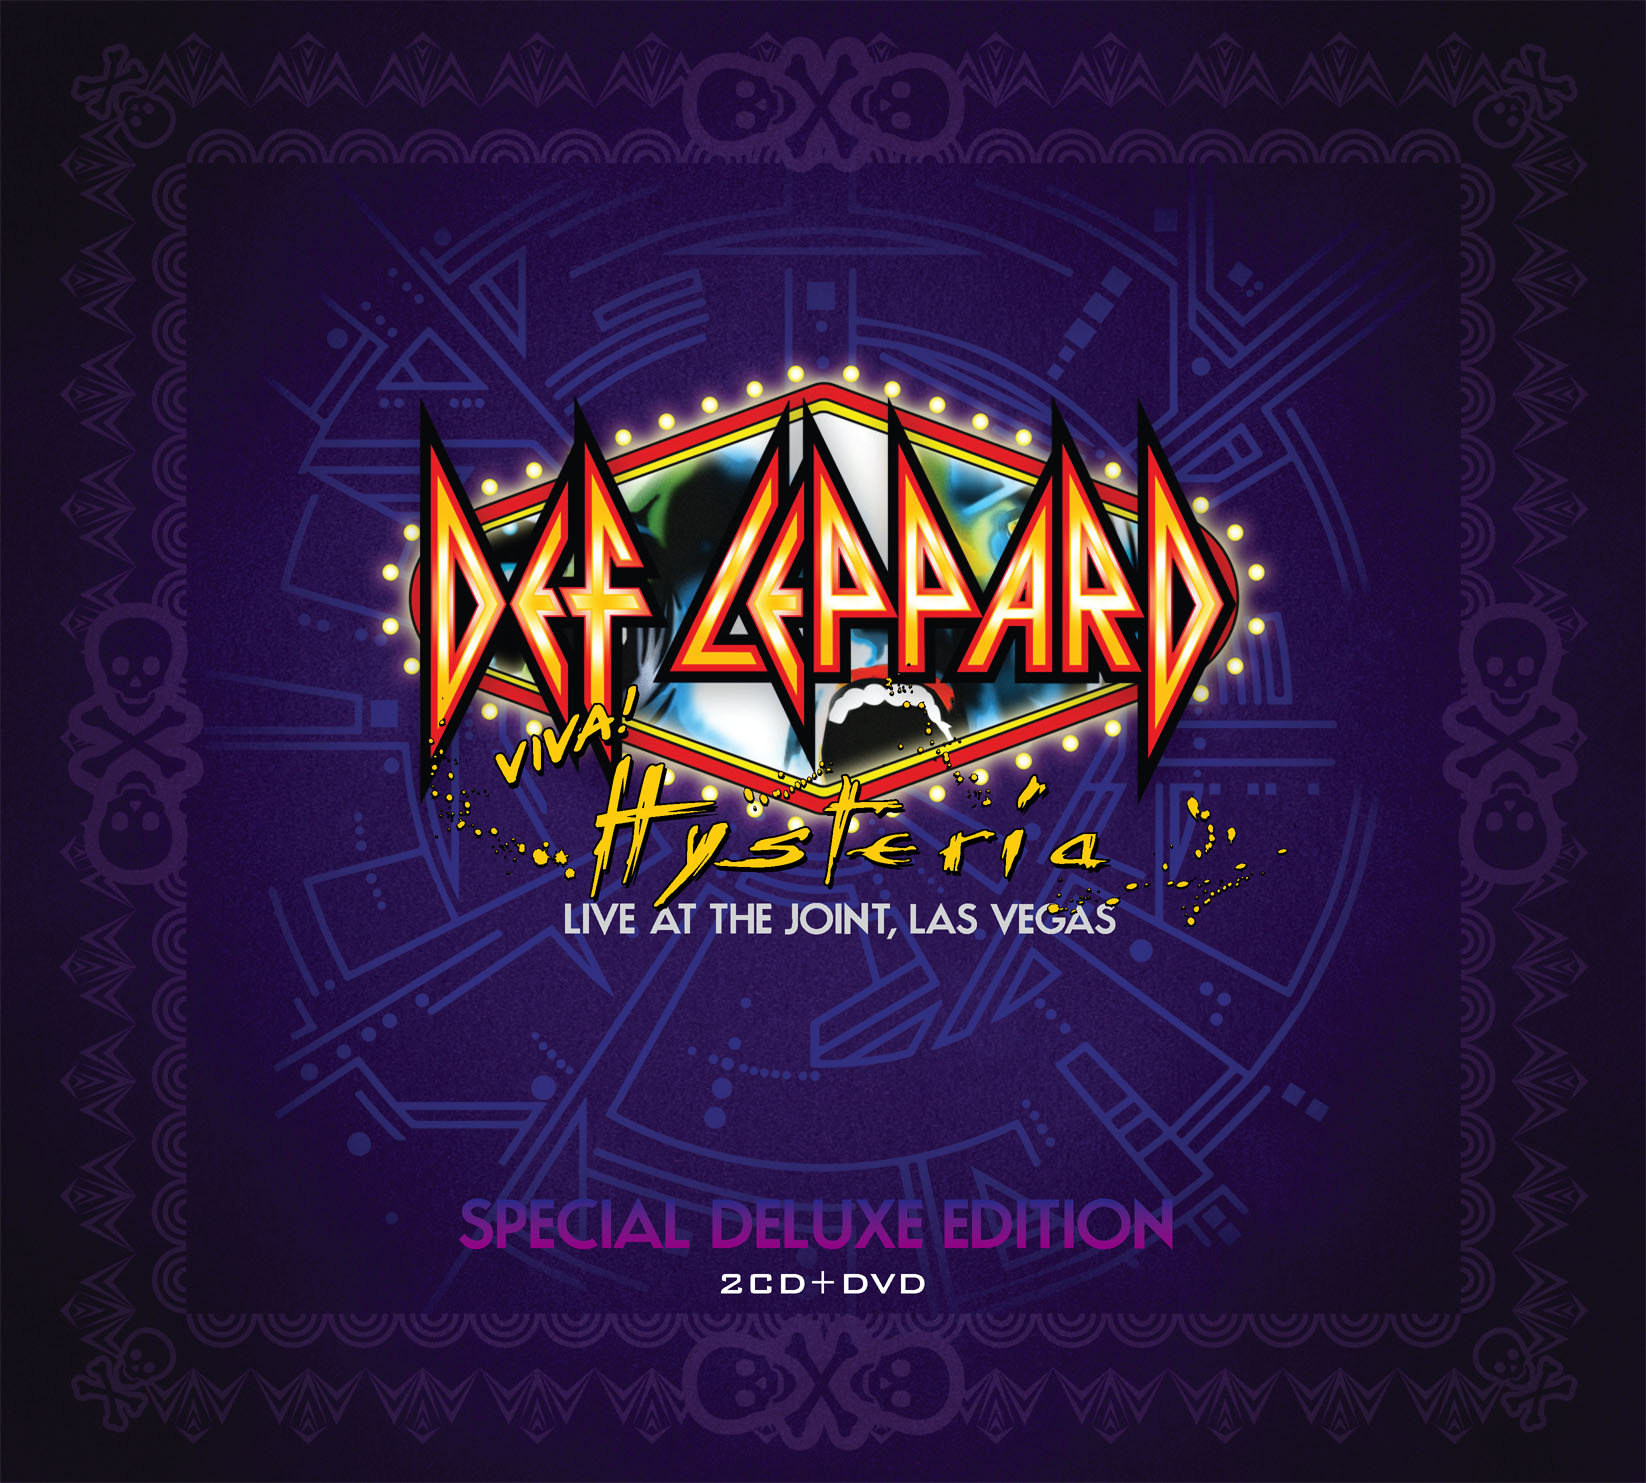 Def Leppard - Viva! Hysteria (2CD+DVD)